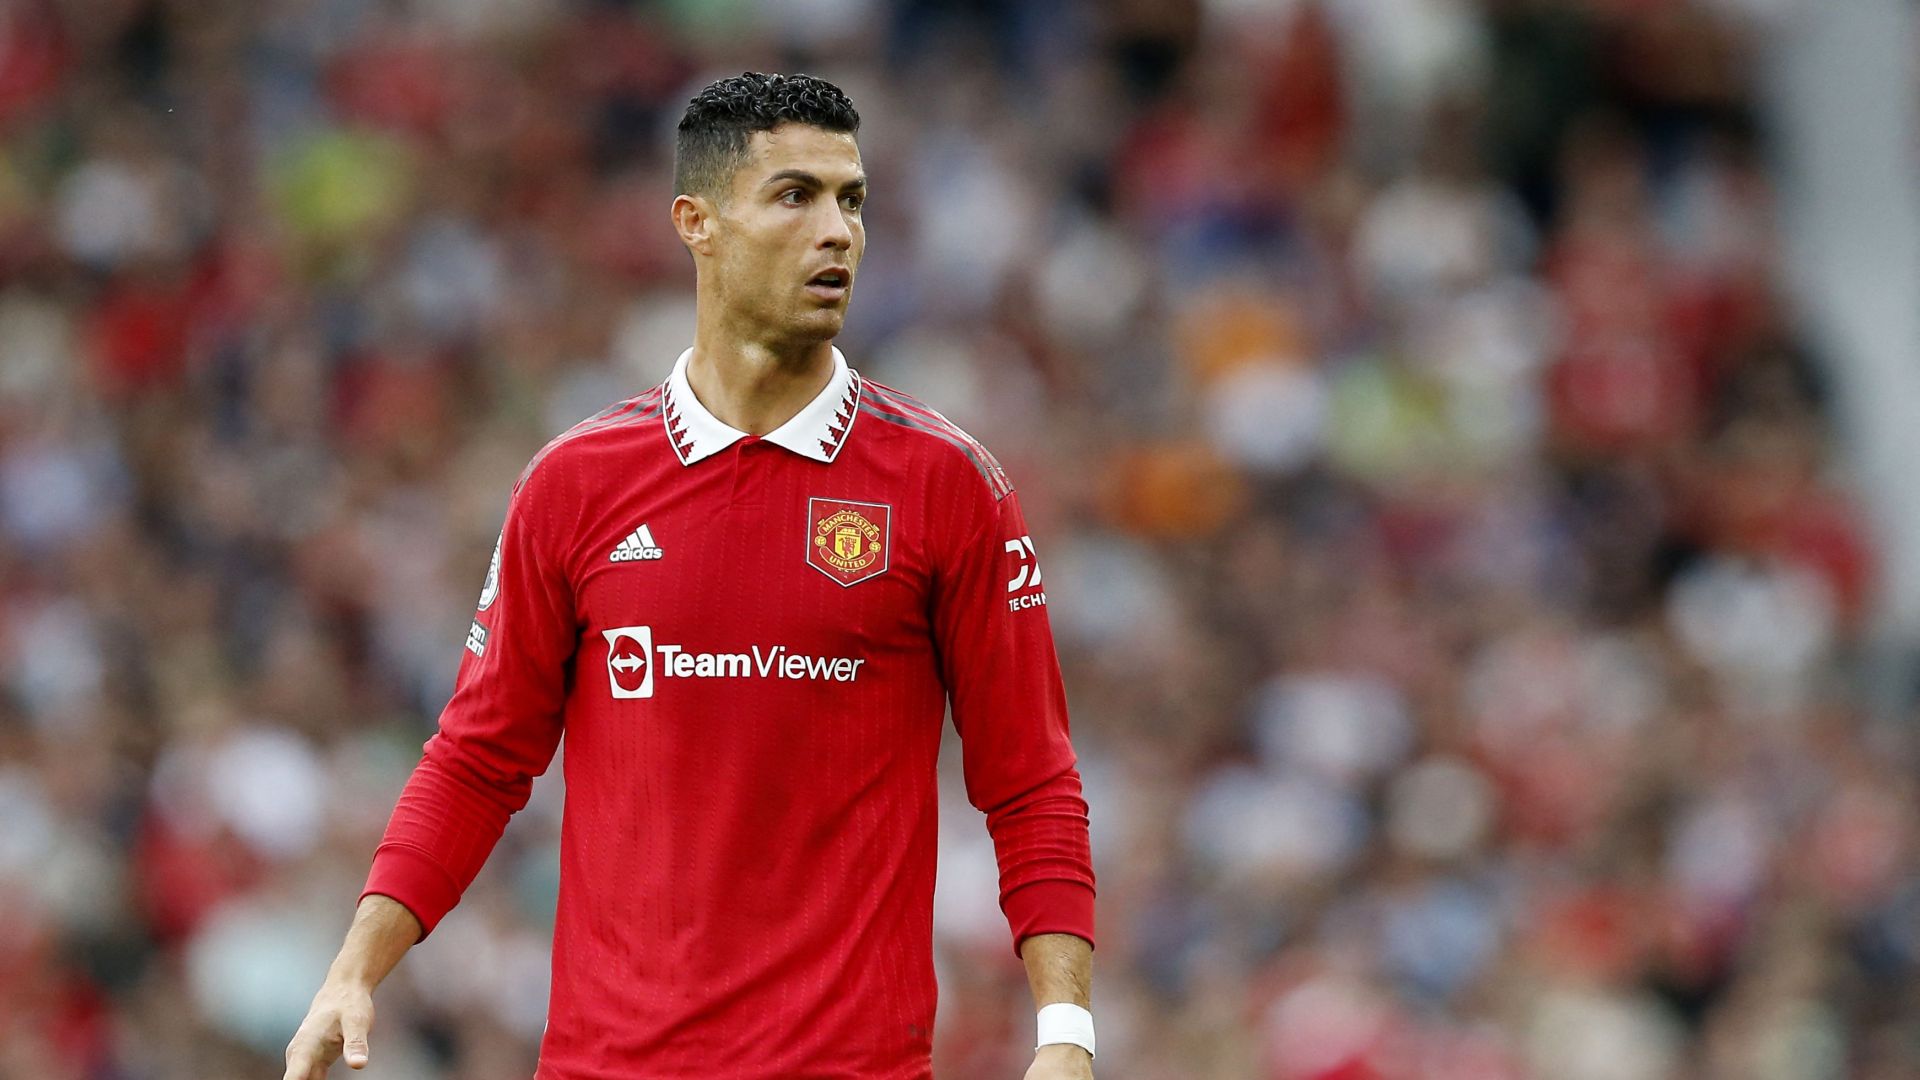 Manchester United vs Real Sociedad EN VIVO HOY: con Cristiano Ronaldo, chocan en Old Trafford por la Europa League - Crusheric